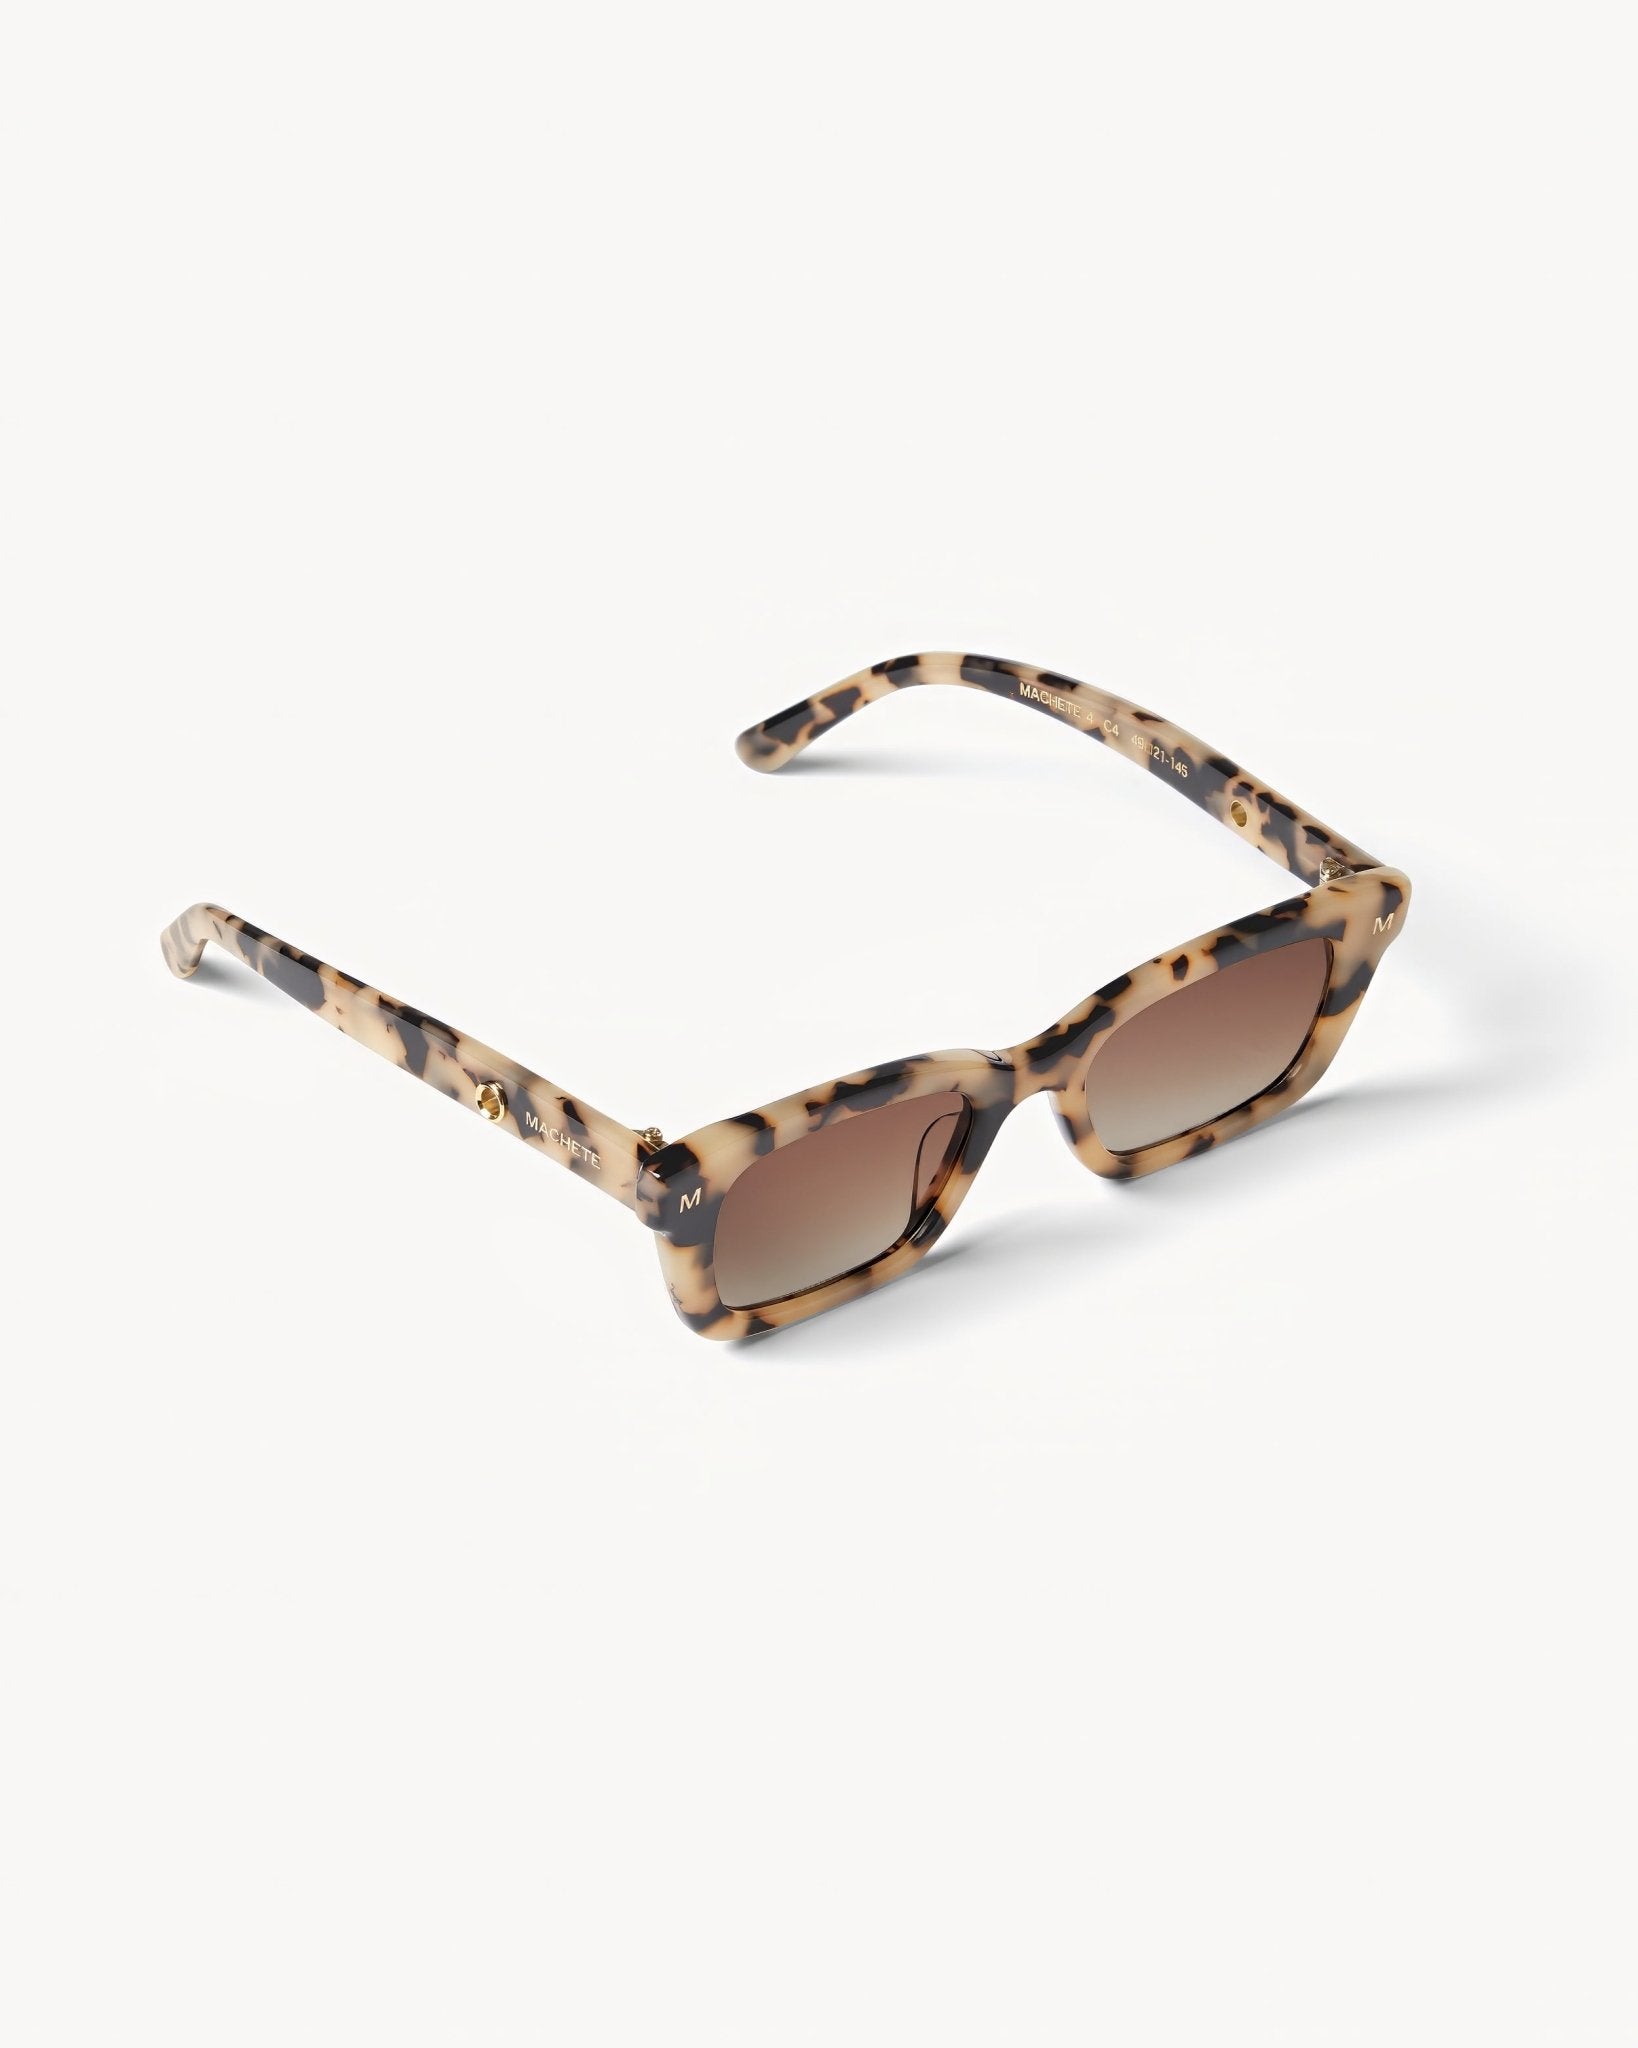 MACHETE Ruby Sunglasses in Blonde Tortoise